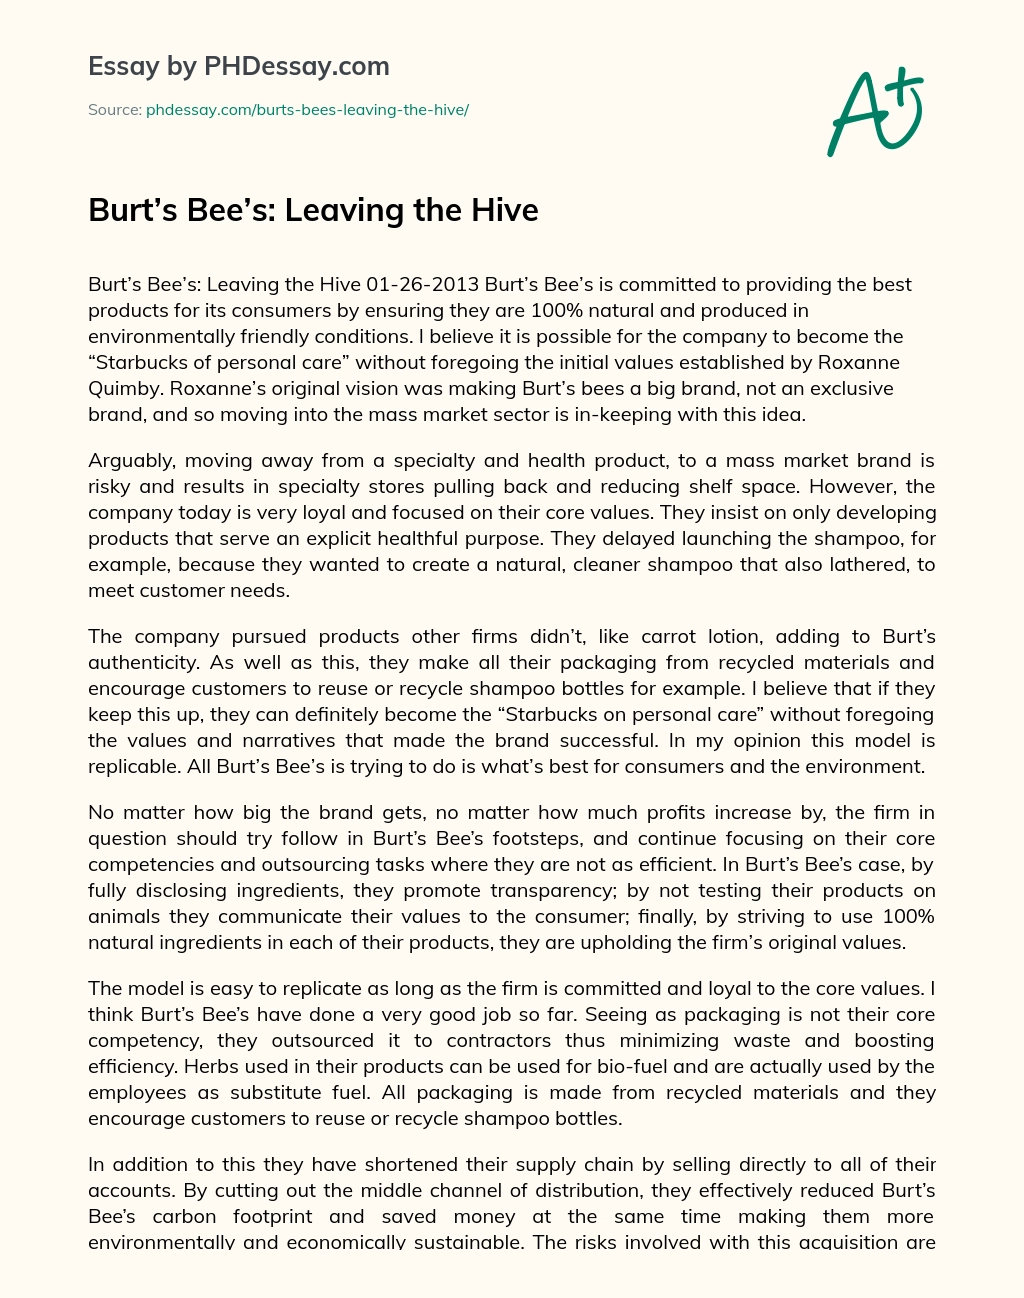 Burt’s Bee’s: Leaving the Hive essay